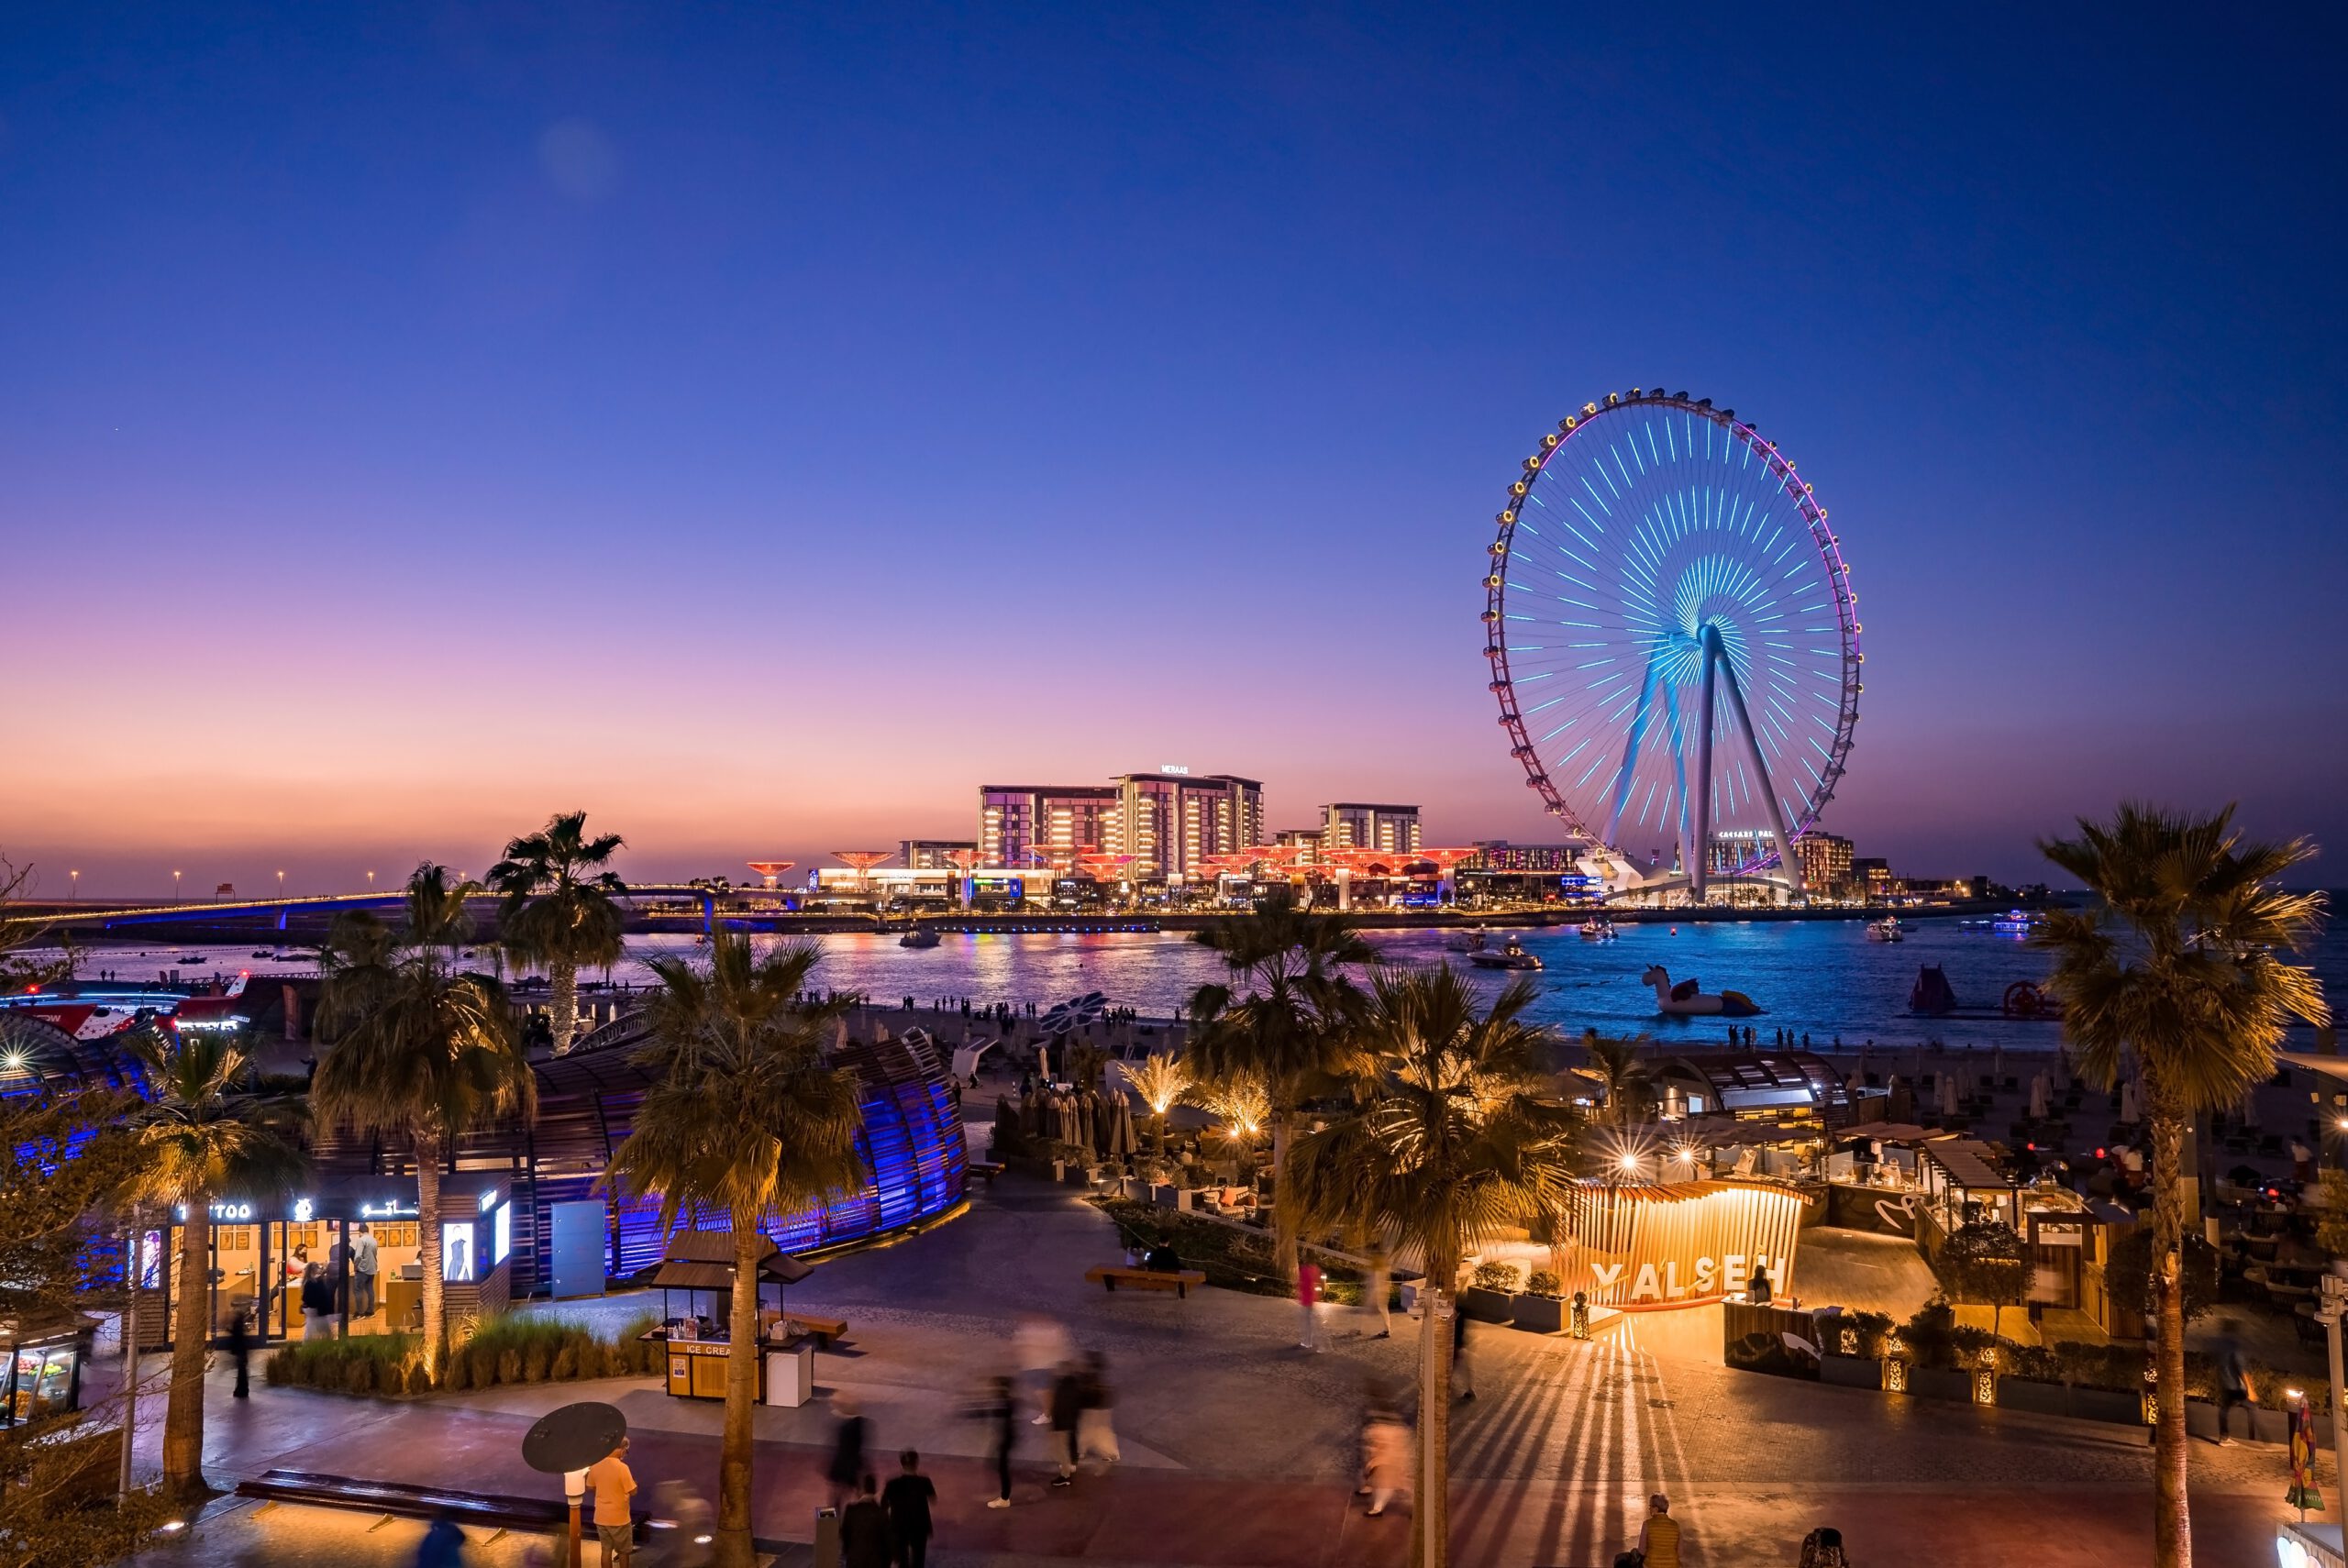 Ain Dubai Ferris Wheel - World's largest observation wheel